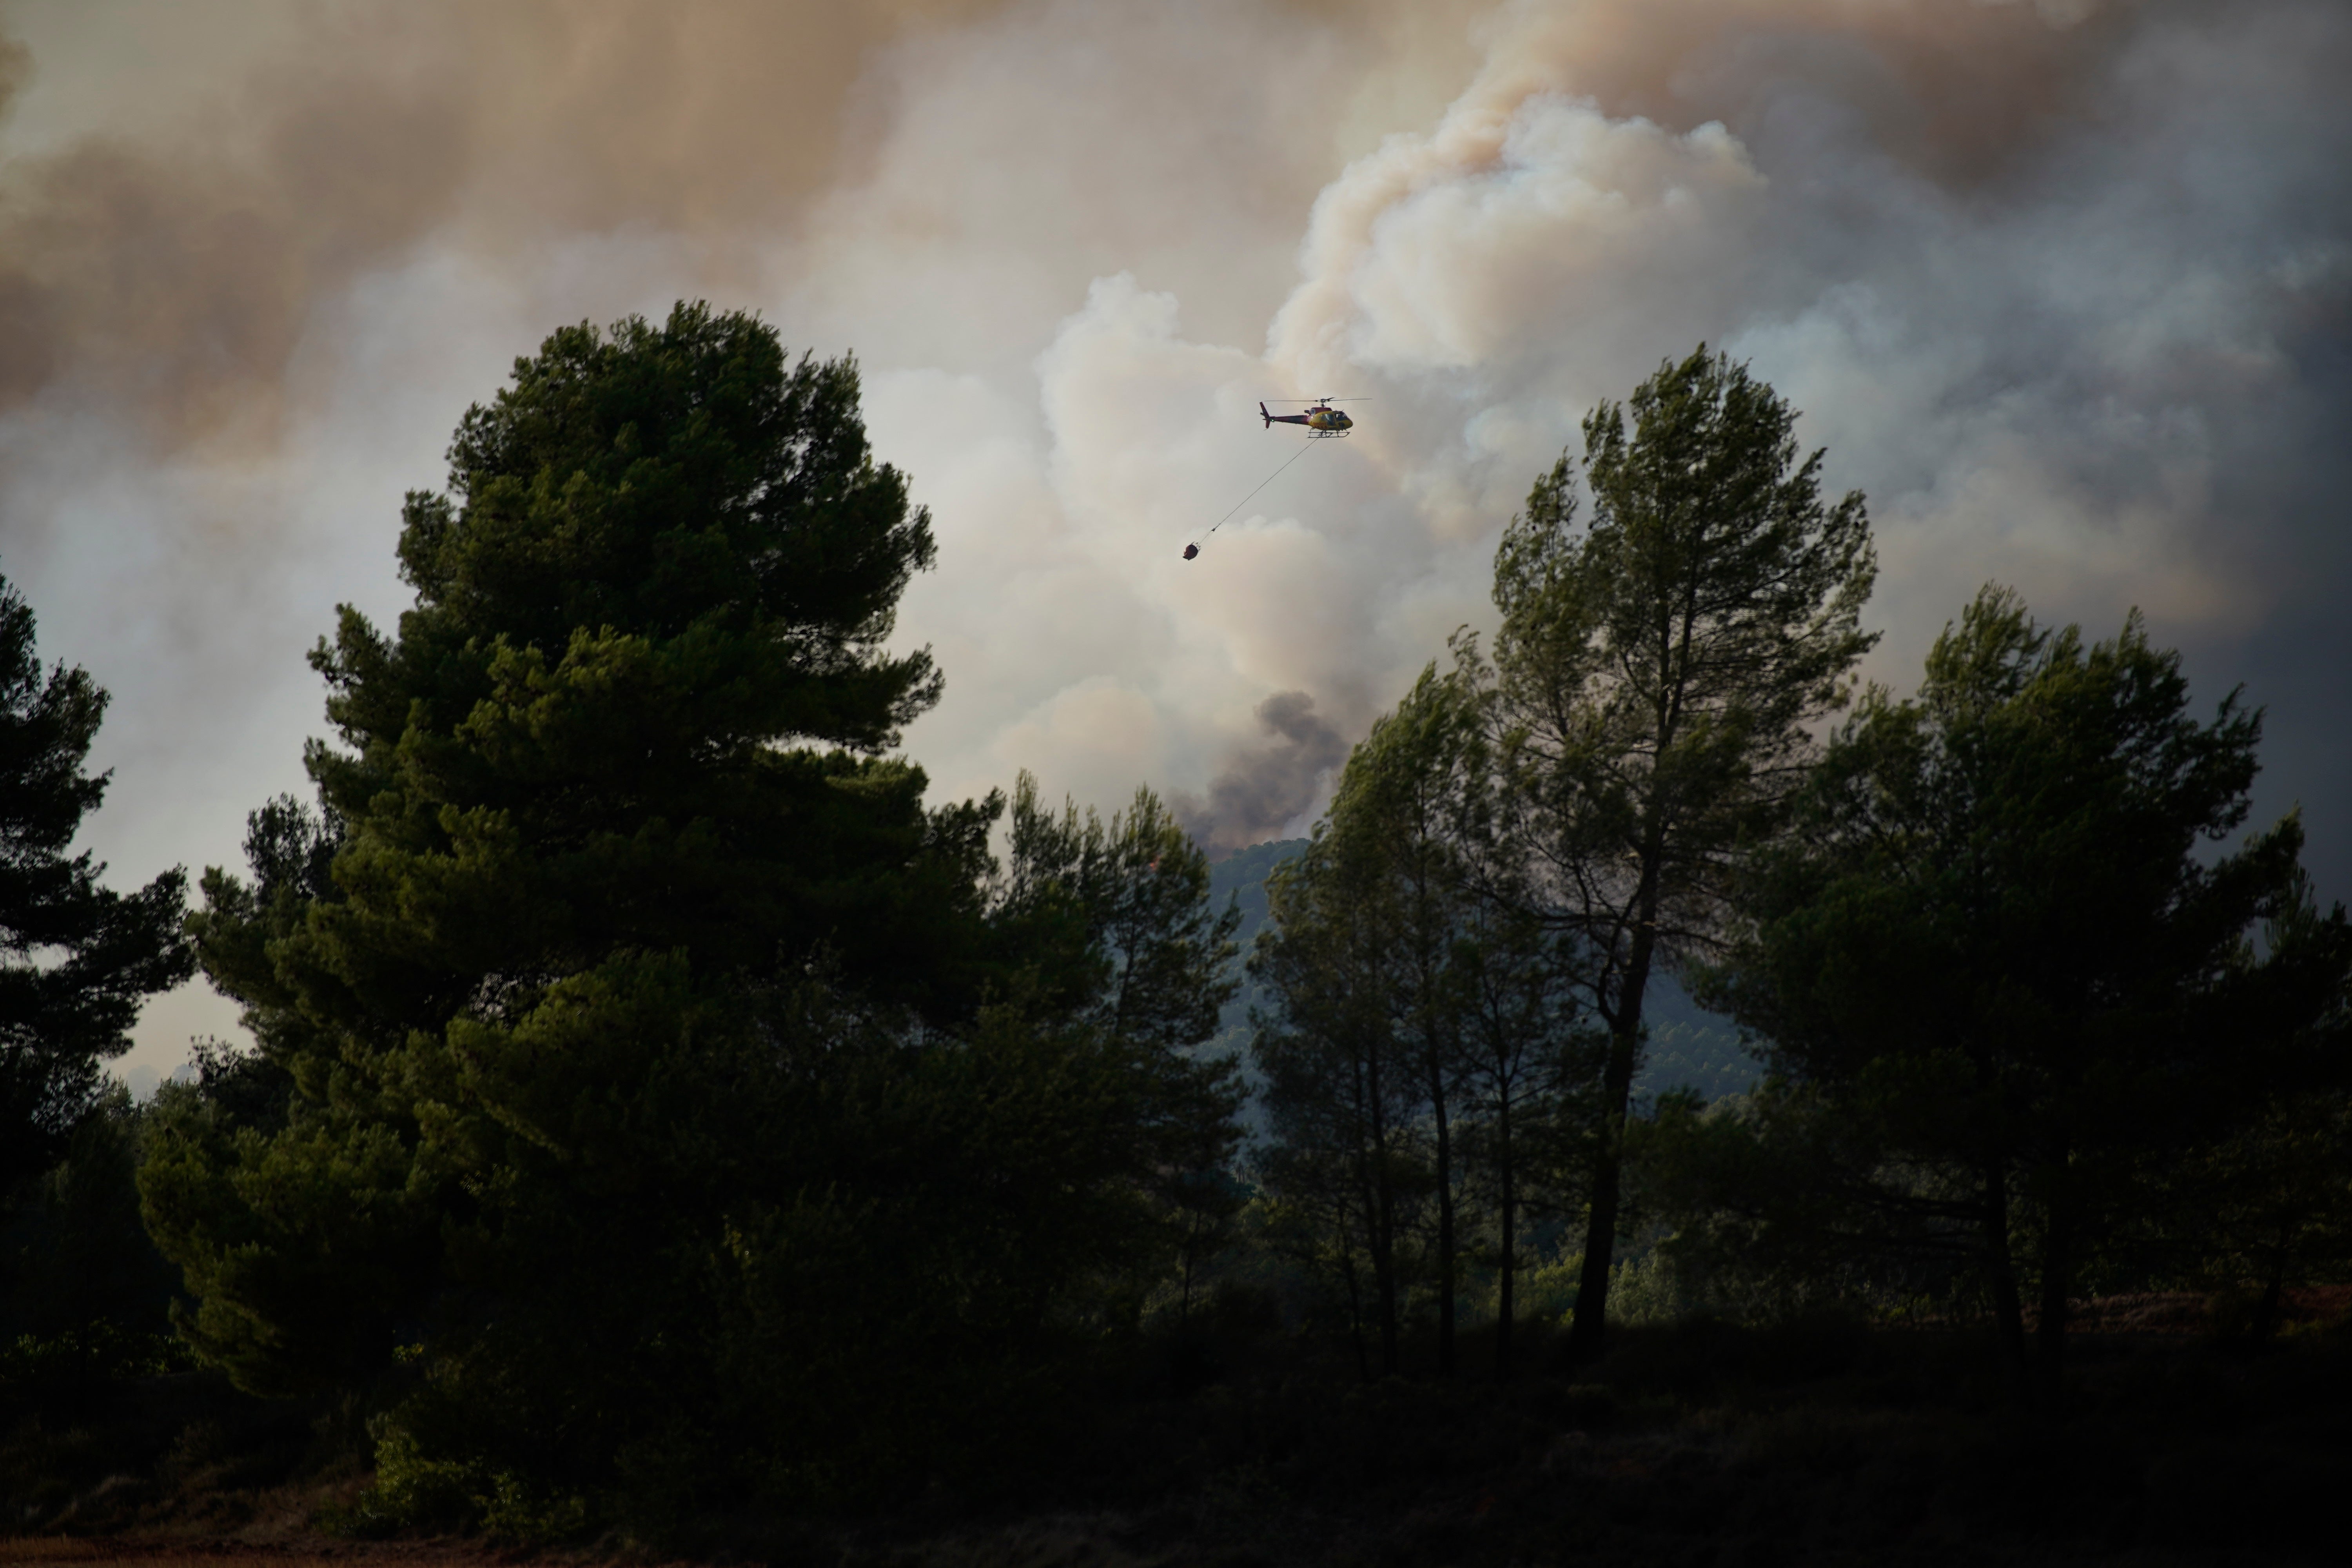 Spain Wildfire